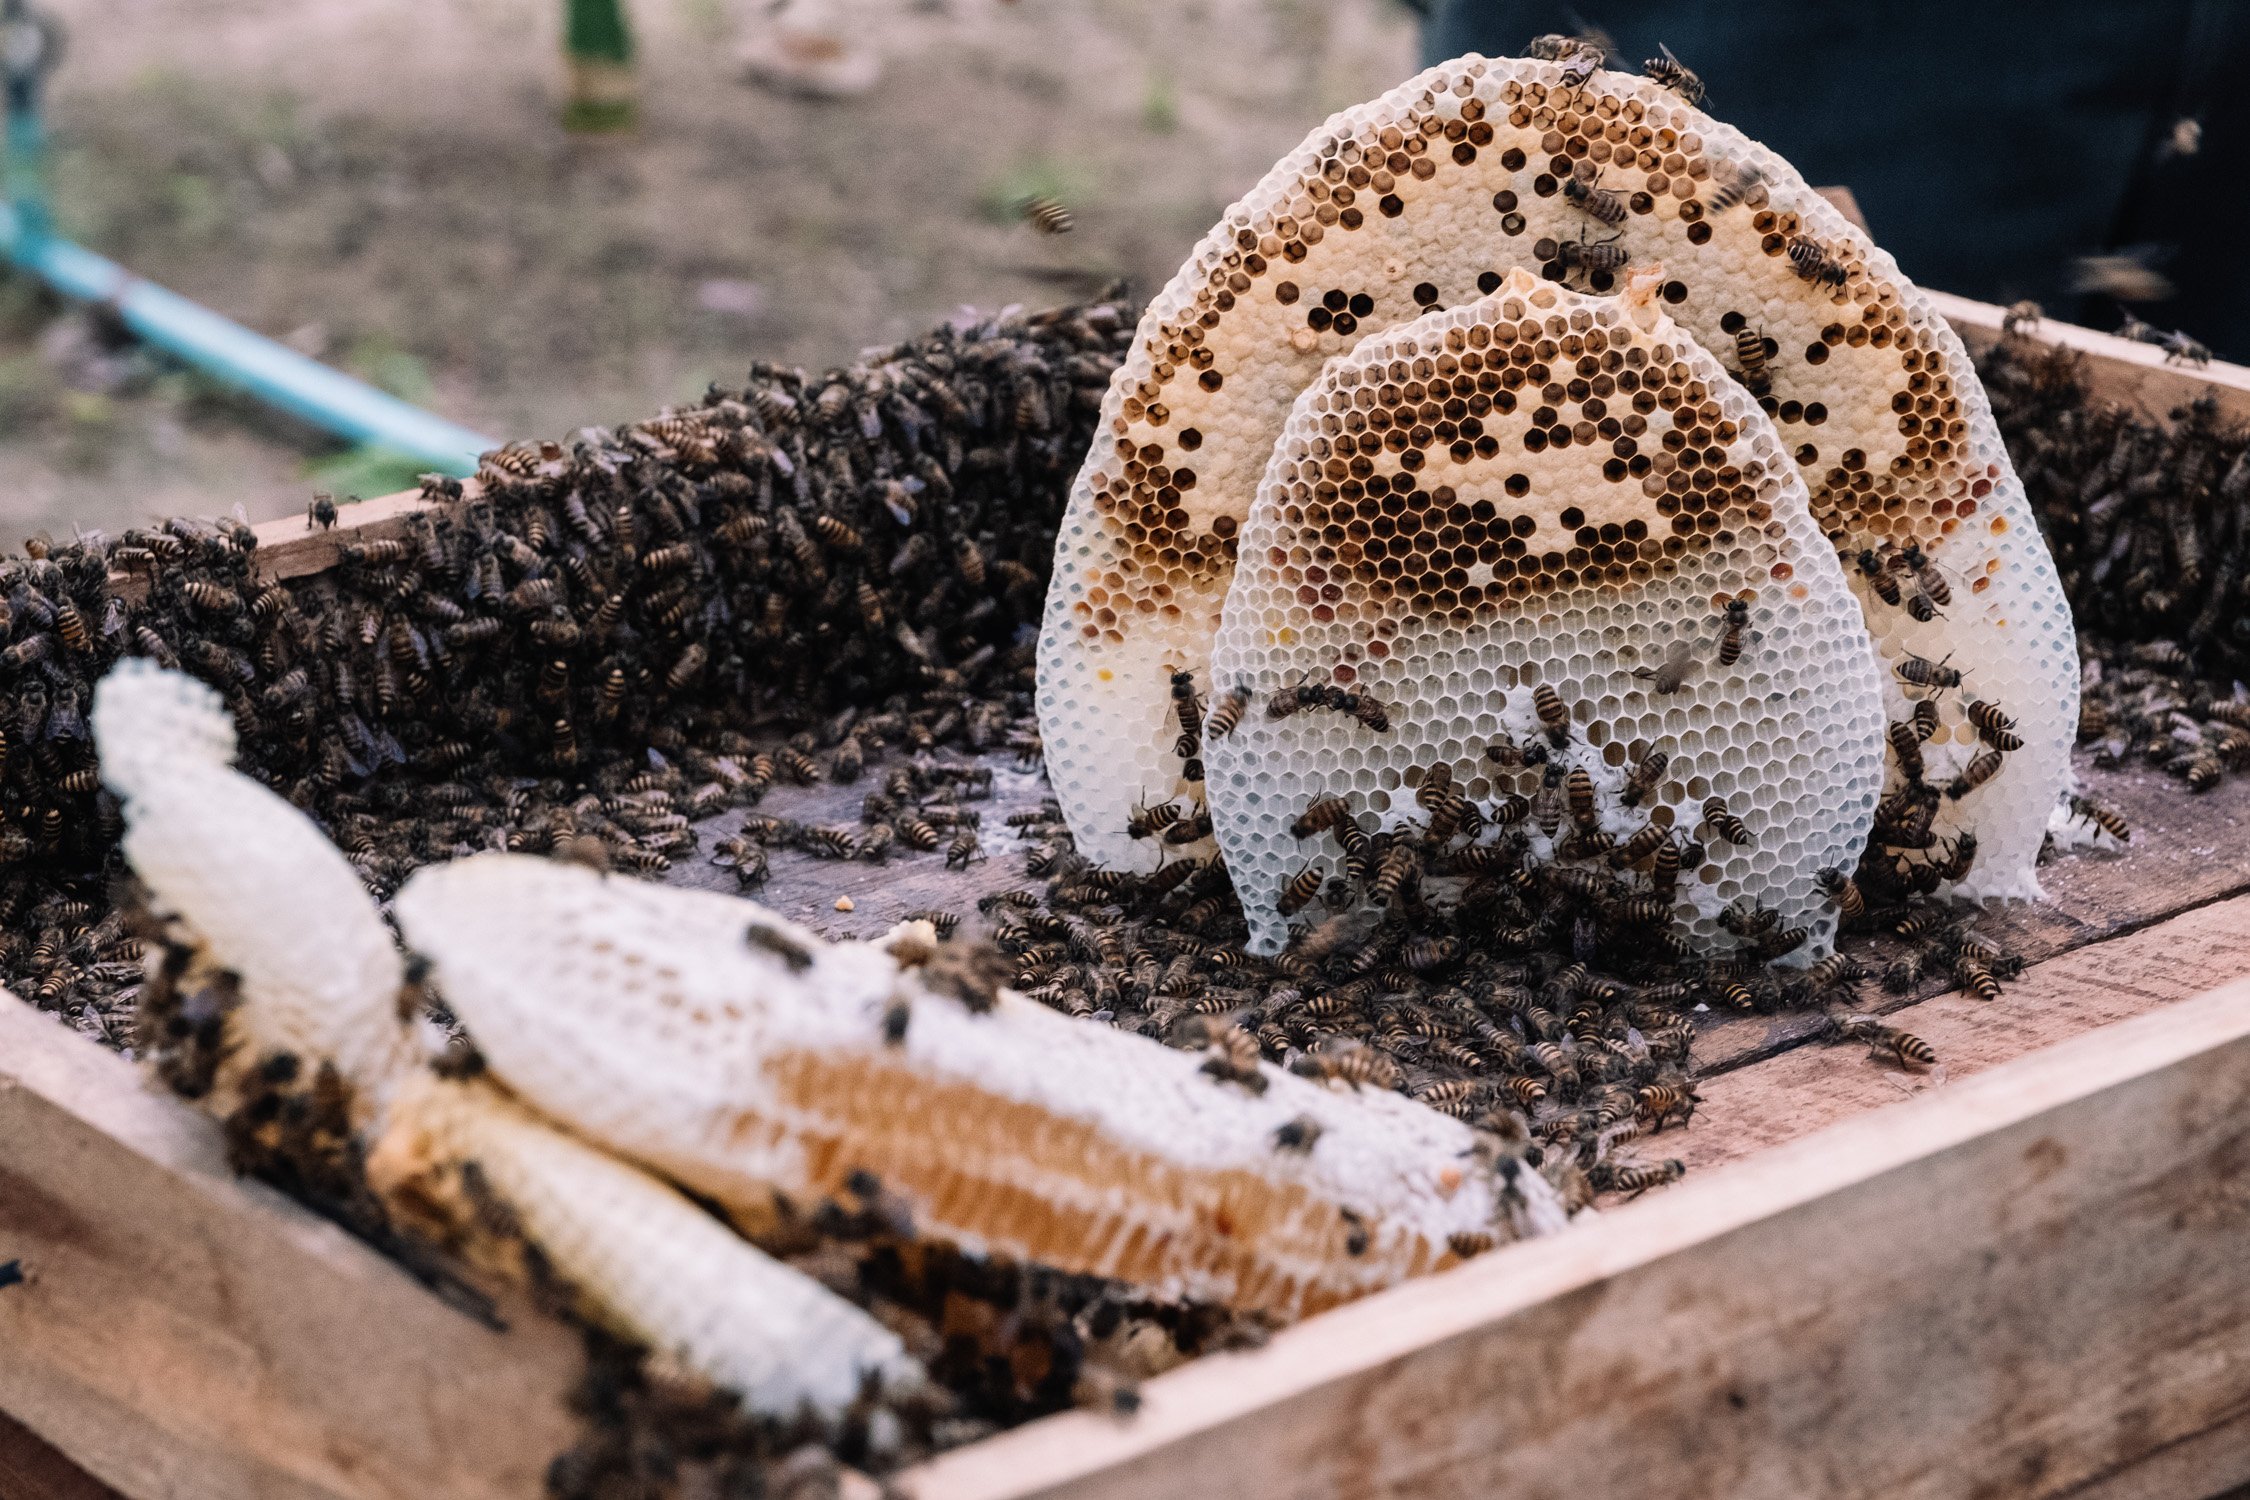 Apis cerana beekeeping in Ratchaburi